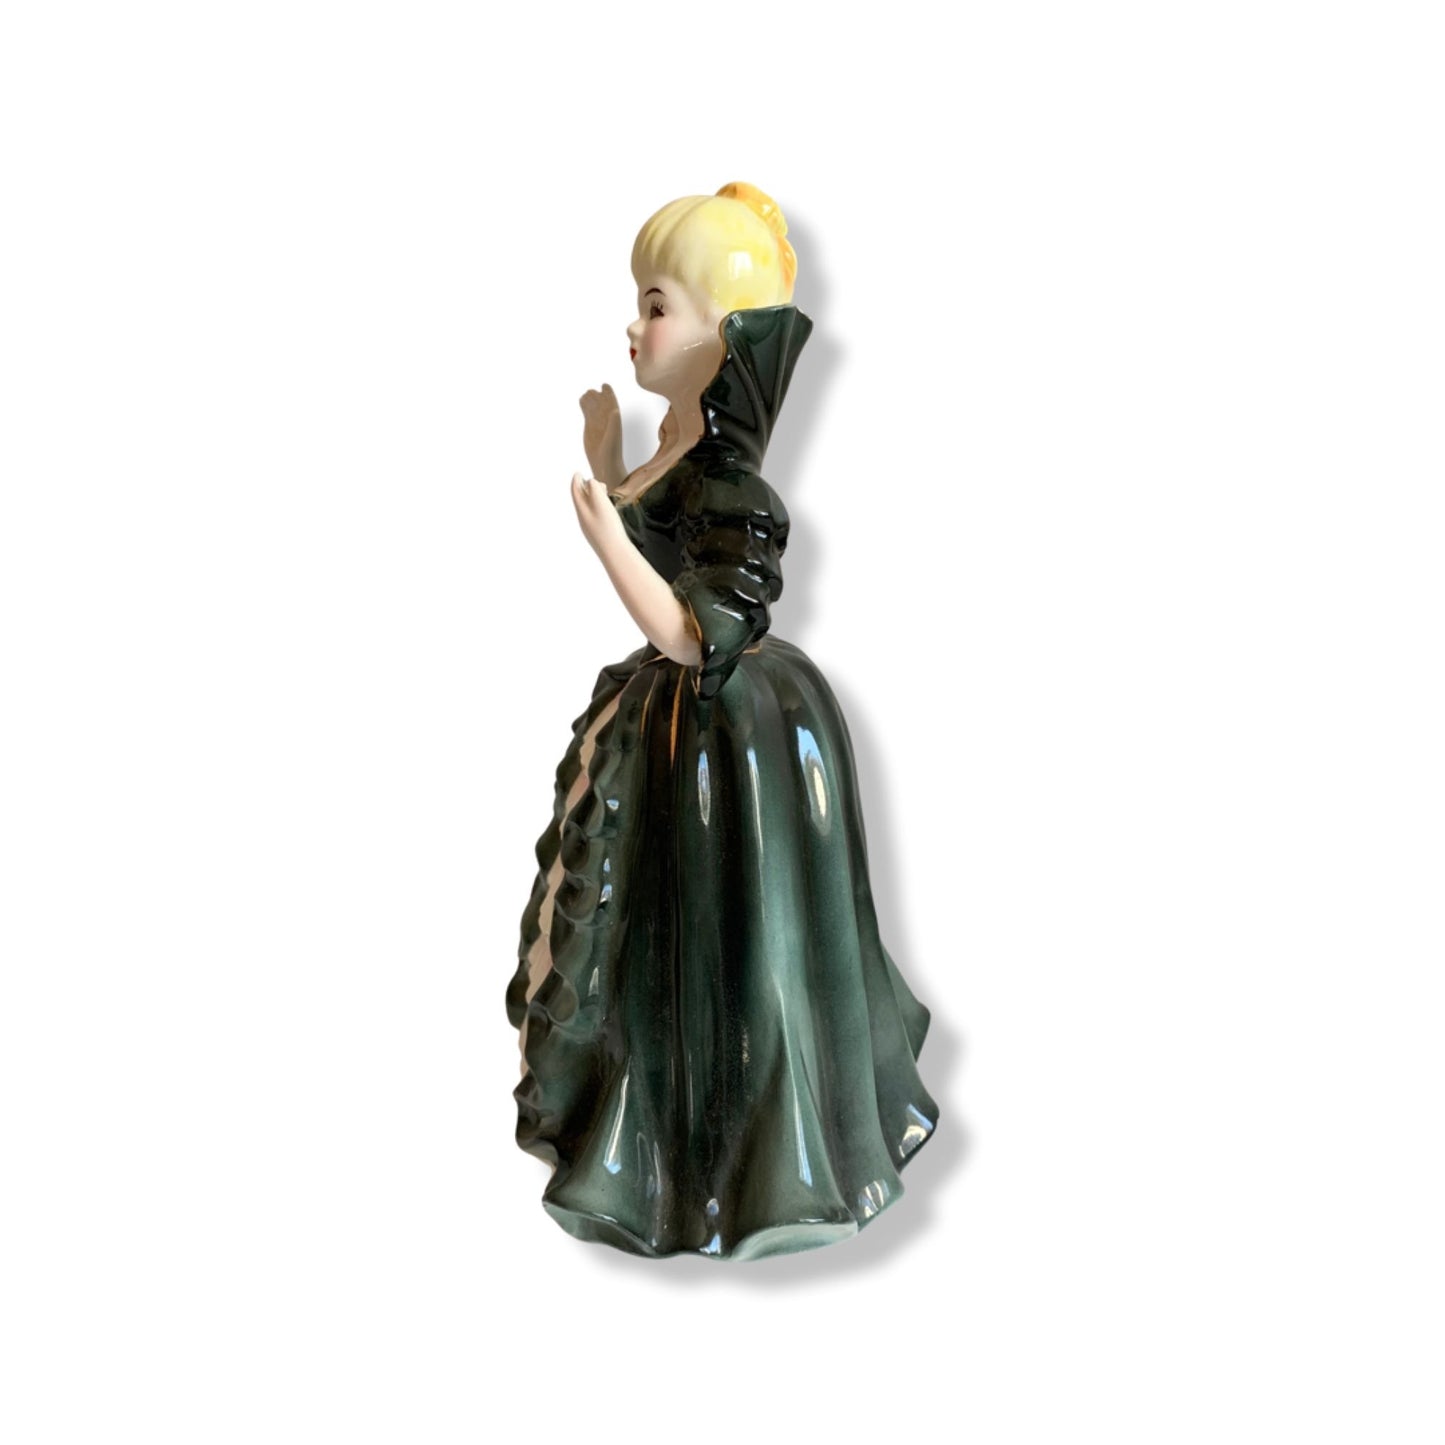 Napco Lady Juliet Dark Green Dress Figurine Vintage